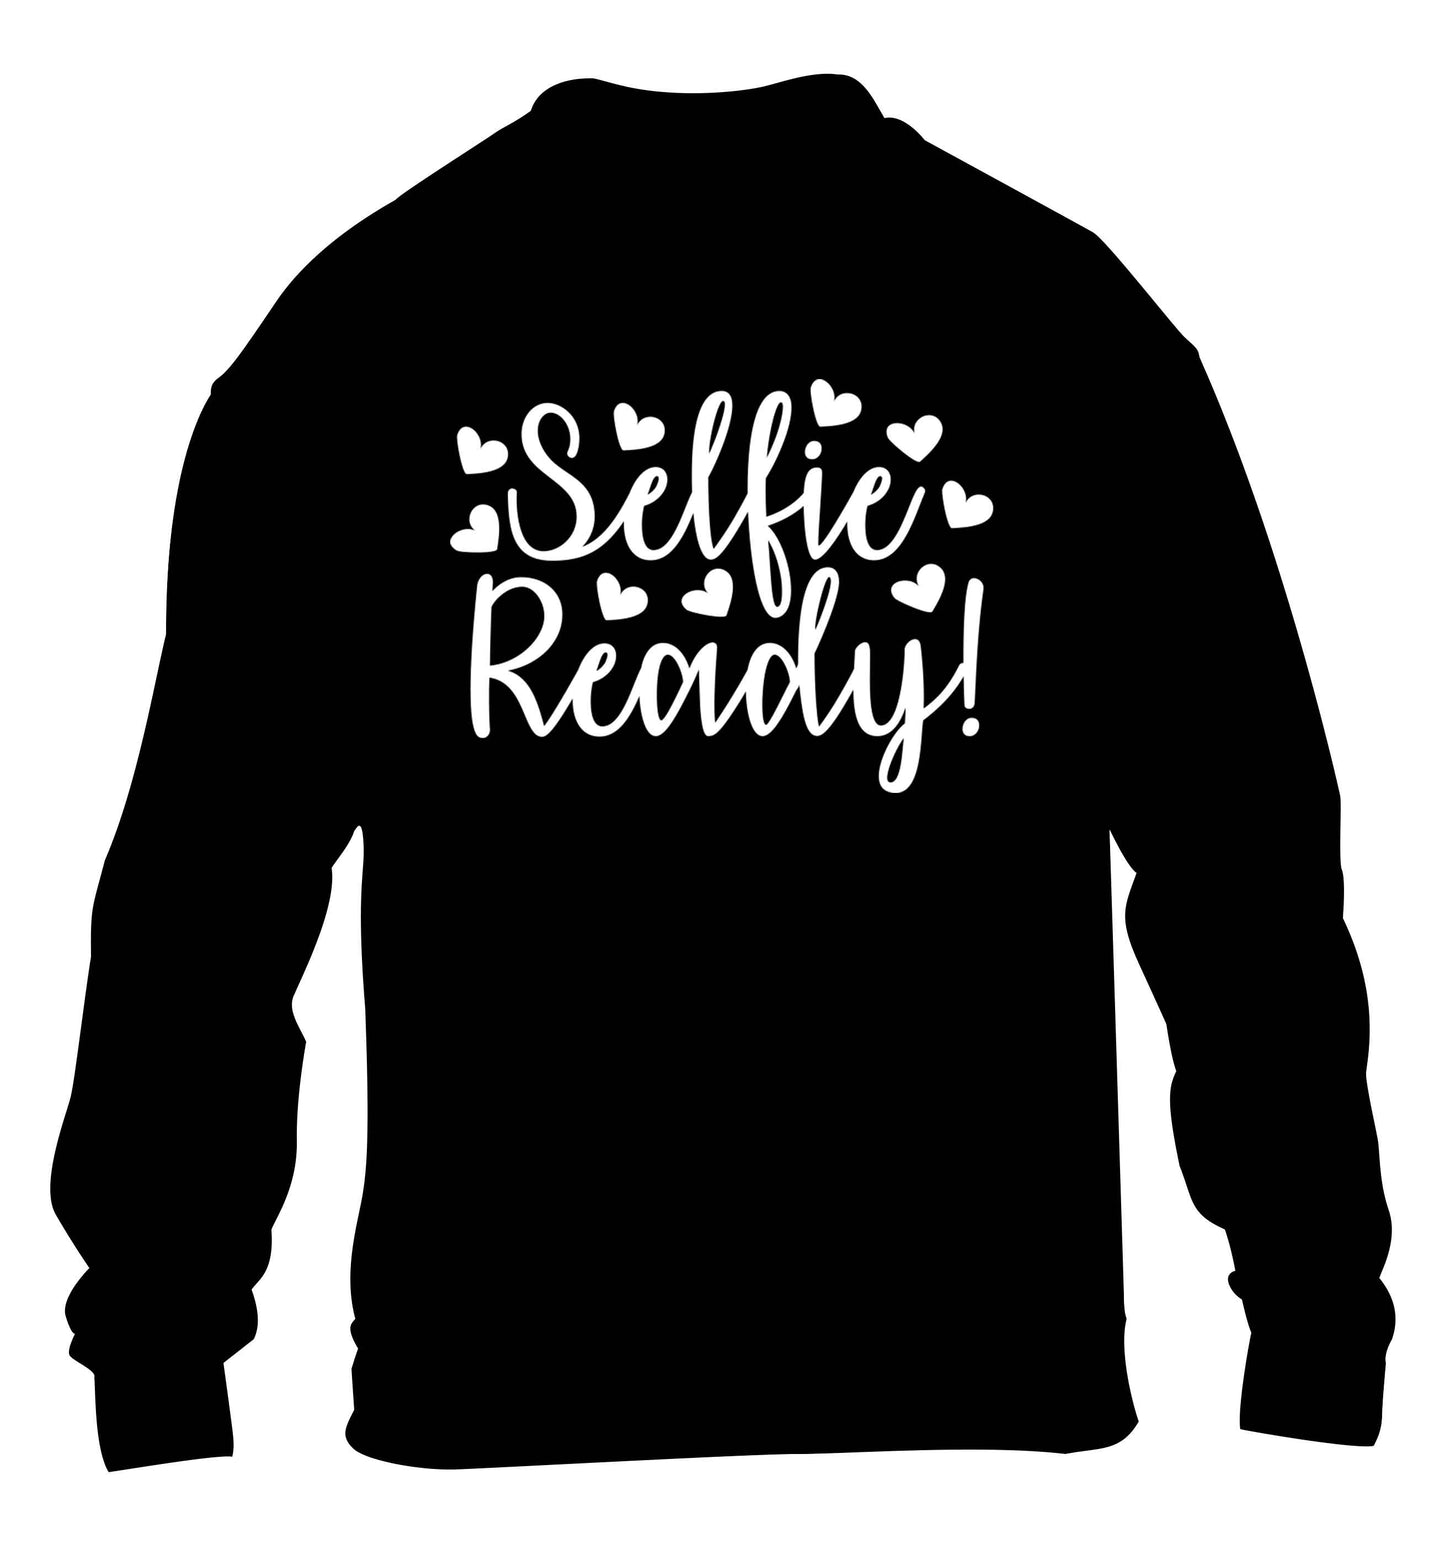 Selfie ready children's black sweater 12-13 Years